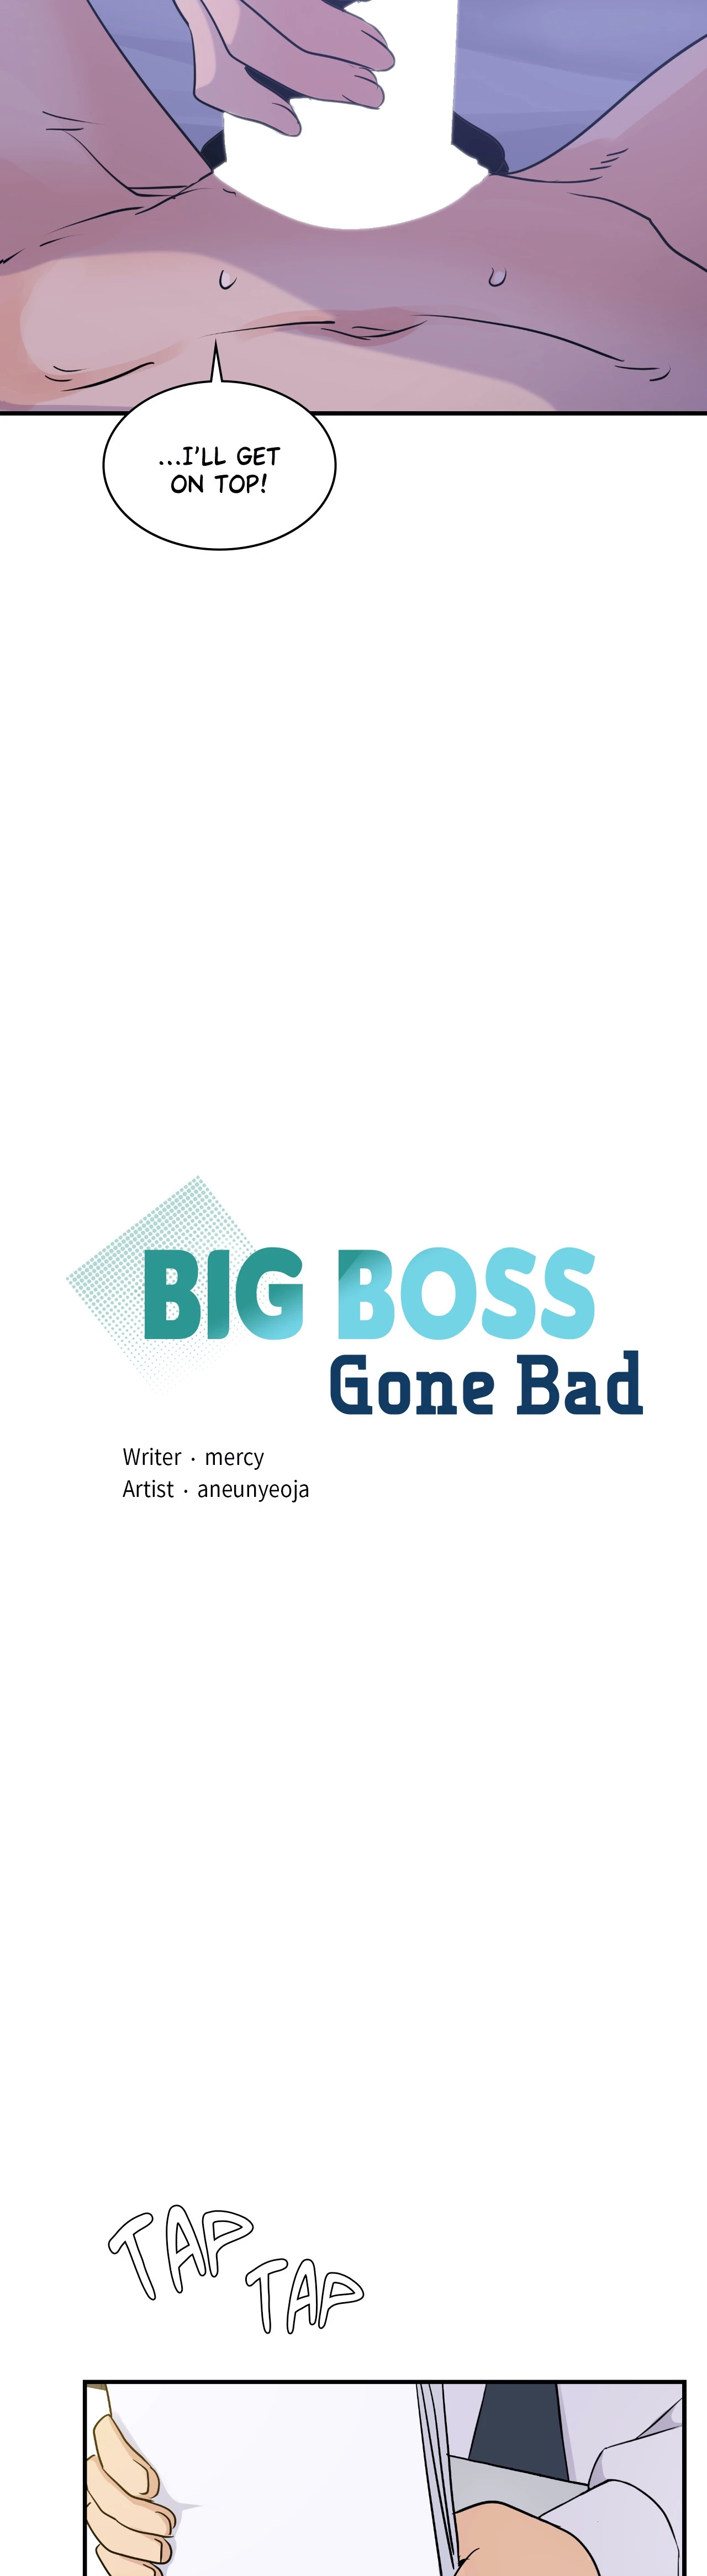 Big Boss Gone Bad NEW image